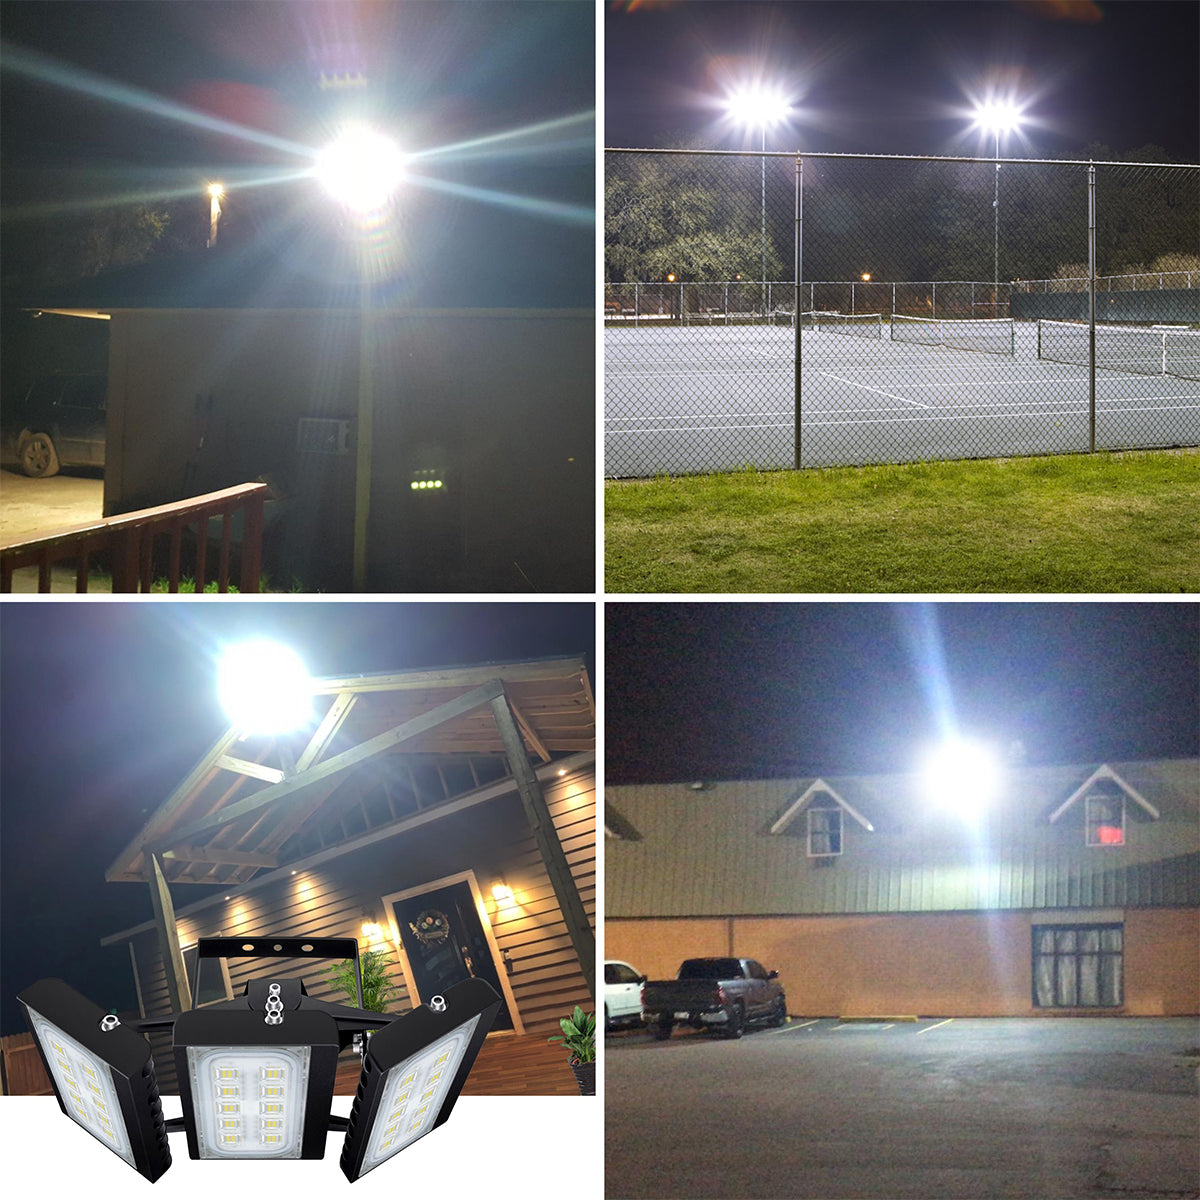 STASUN LED Flood Light Outdoor, 150W 13500lm Outdoor Lighting, 6000K D